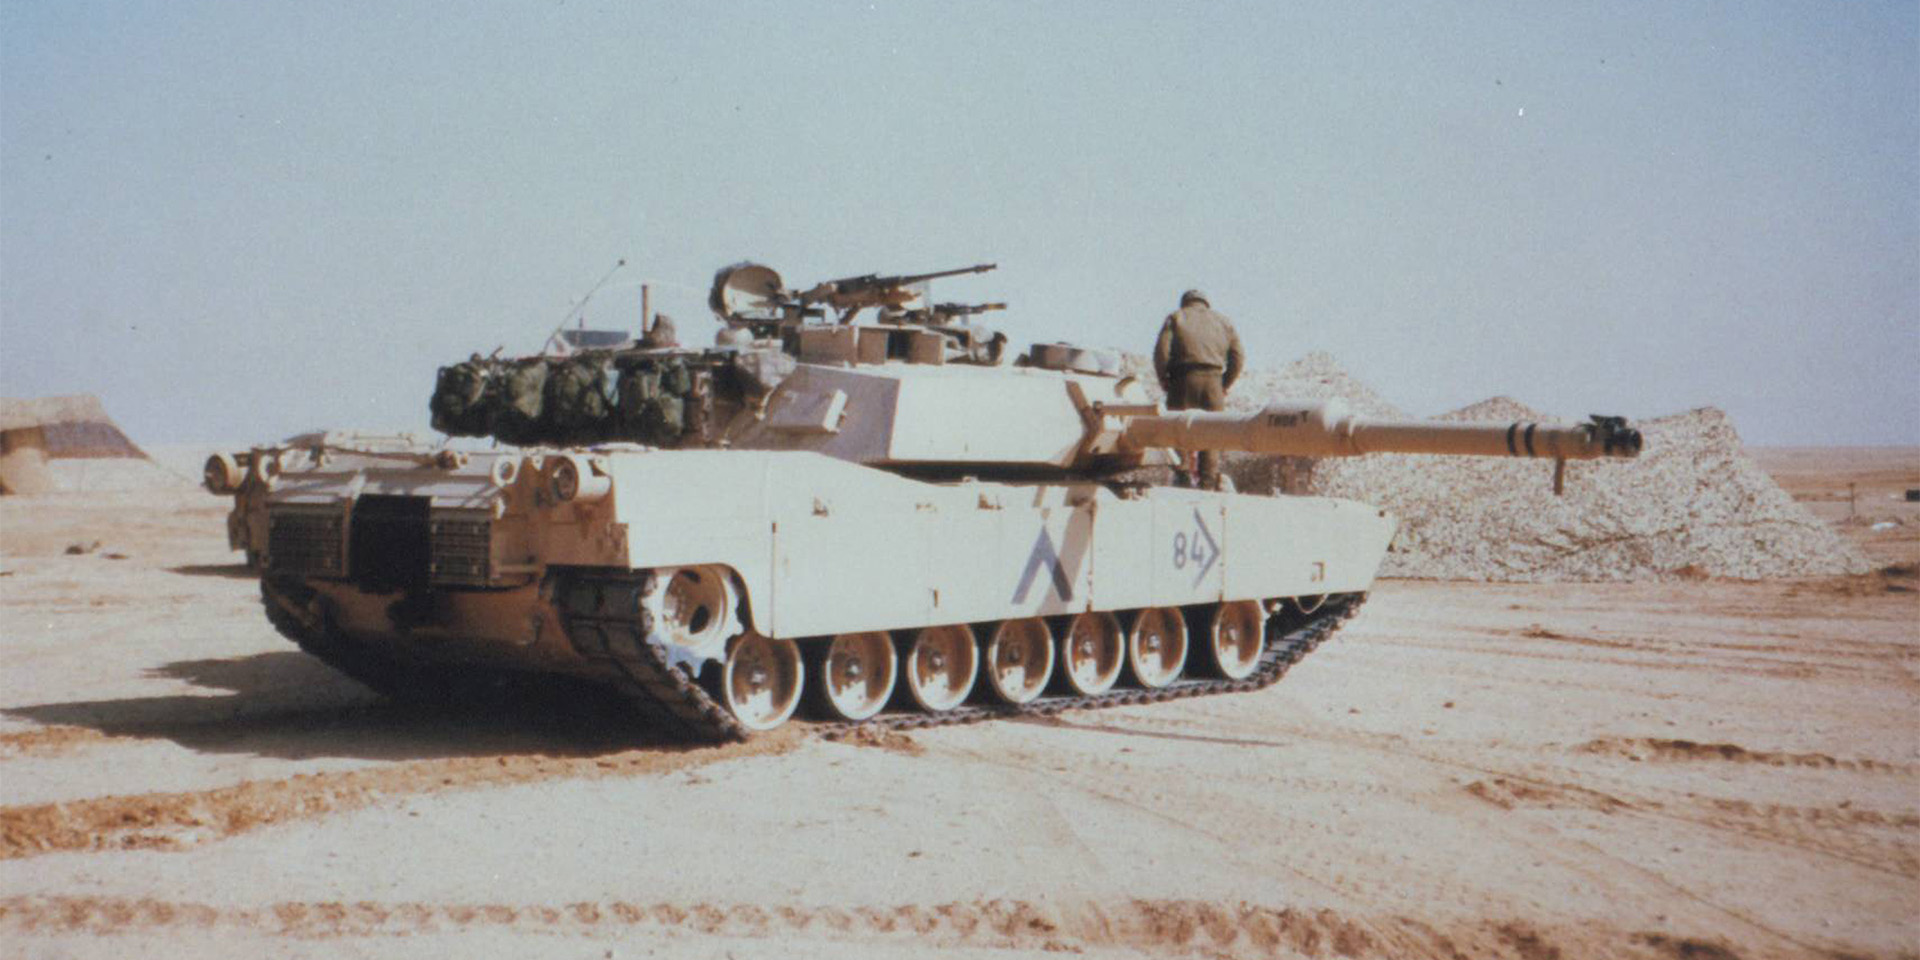 American M1 Abrams main battle tank, 1991